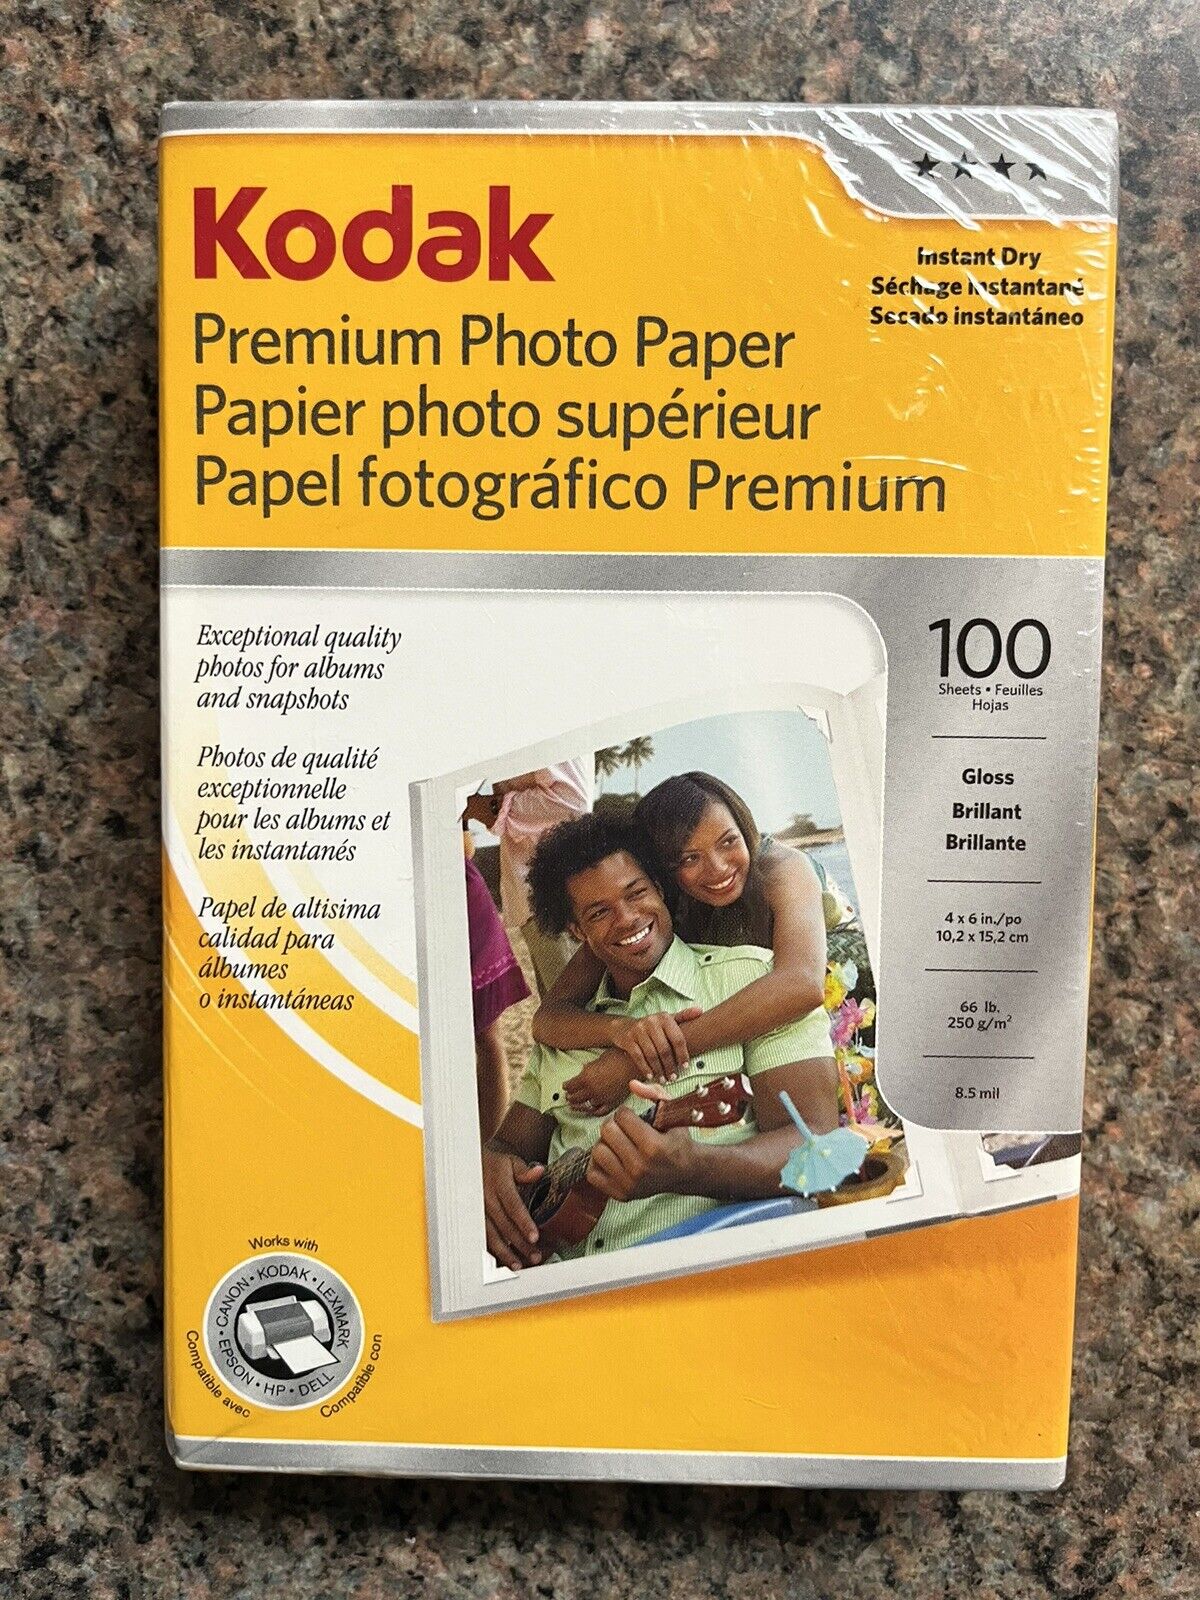 Kodak 4x6 inches Ultra Premium Photo Paper High Gloss 100 Sheets Instant Dry NEW